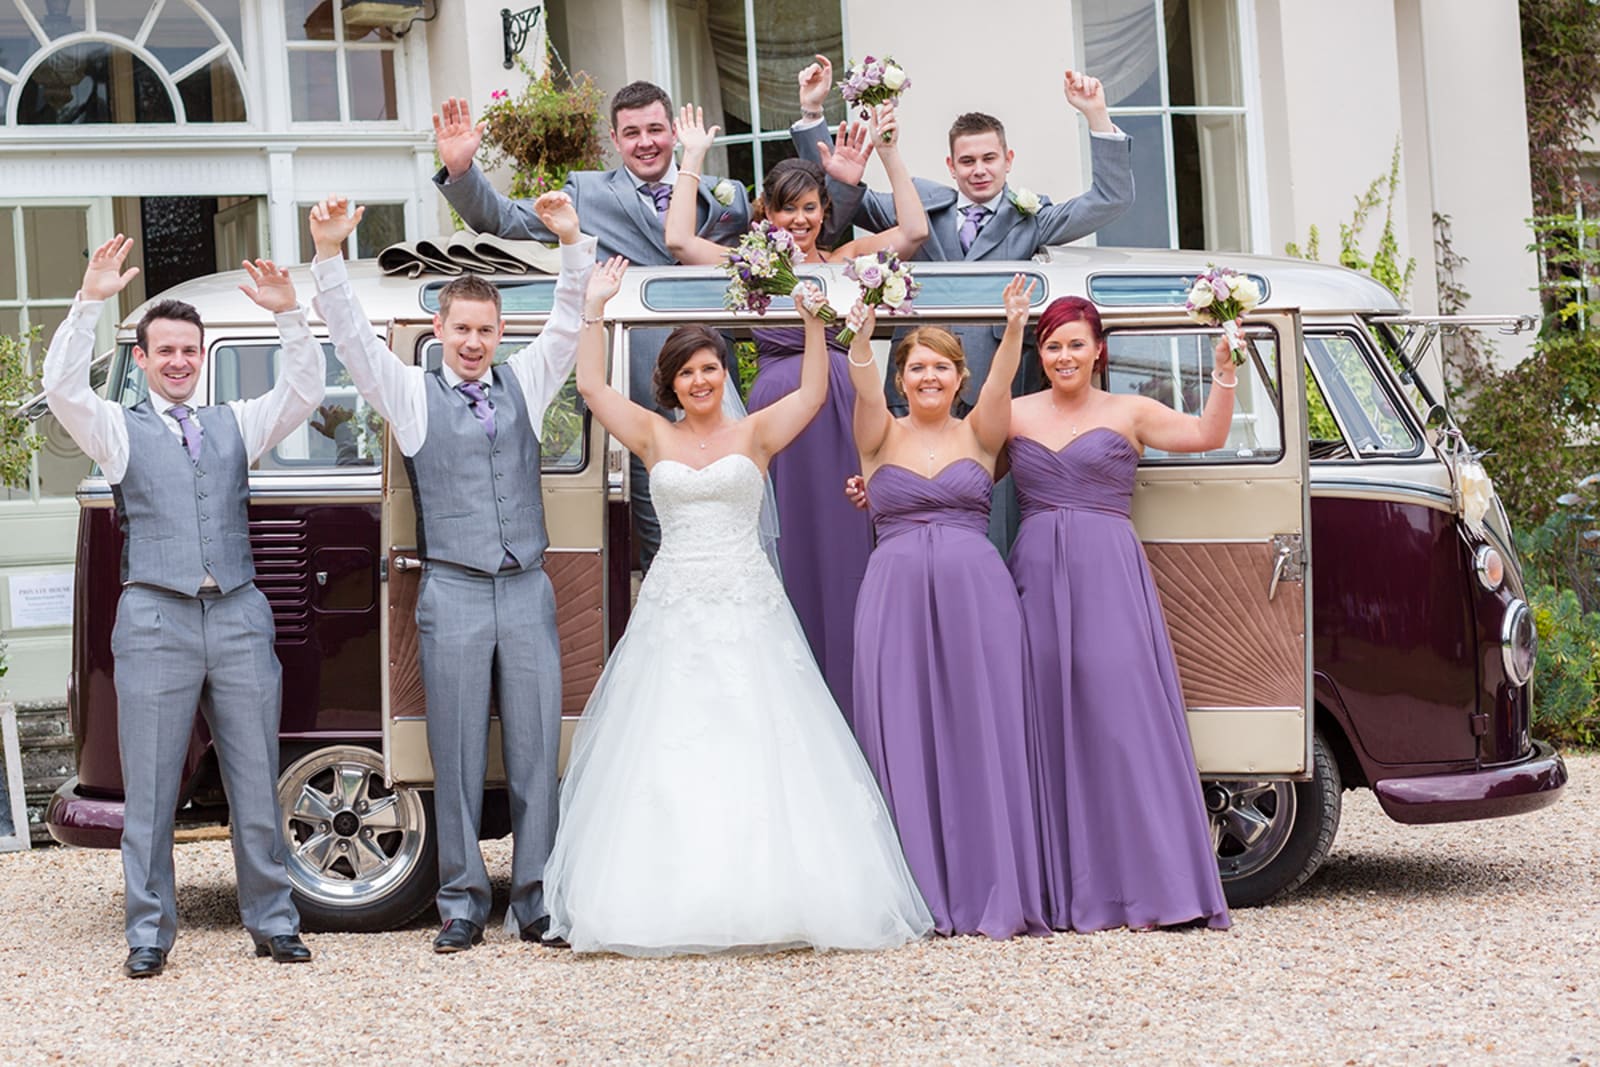 Wales | Powys | Glangrwyney | Summer | Vintage | DIY | Purple | Country House | Real Wedding | Art By Design Photography #Bridebook #RealWedding #WeddingIdeas Bridebook.co.uk 